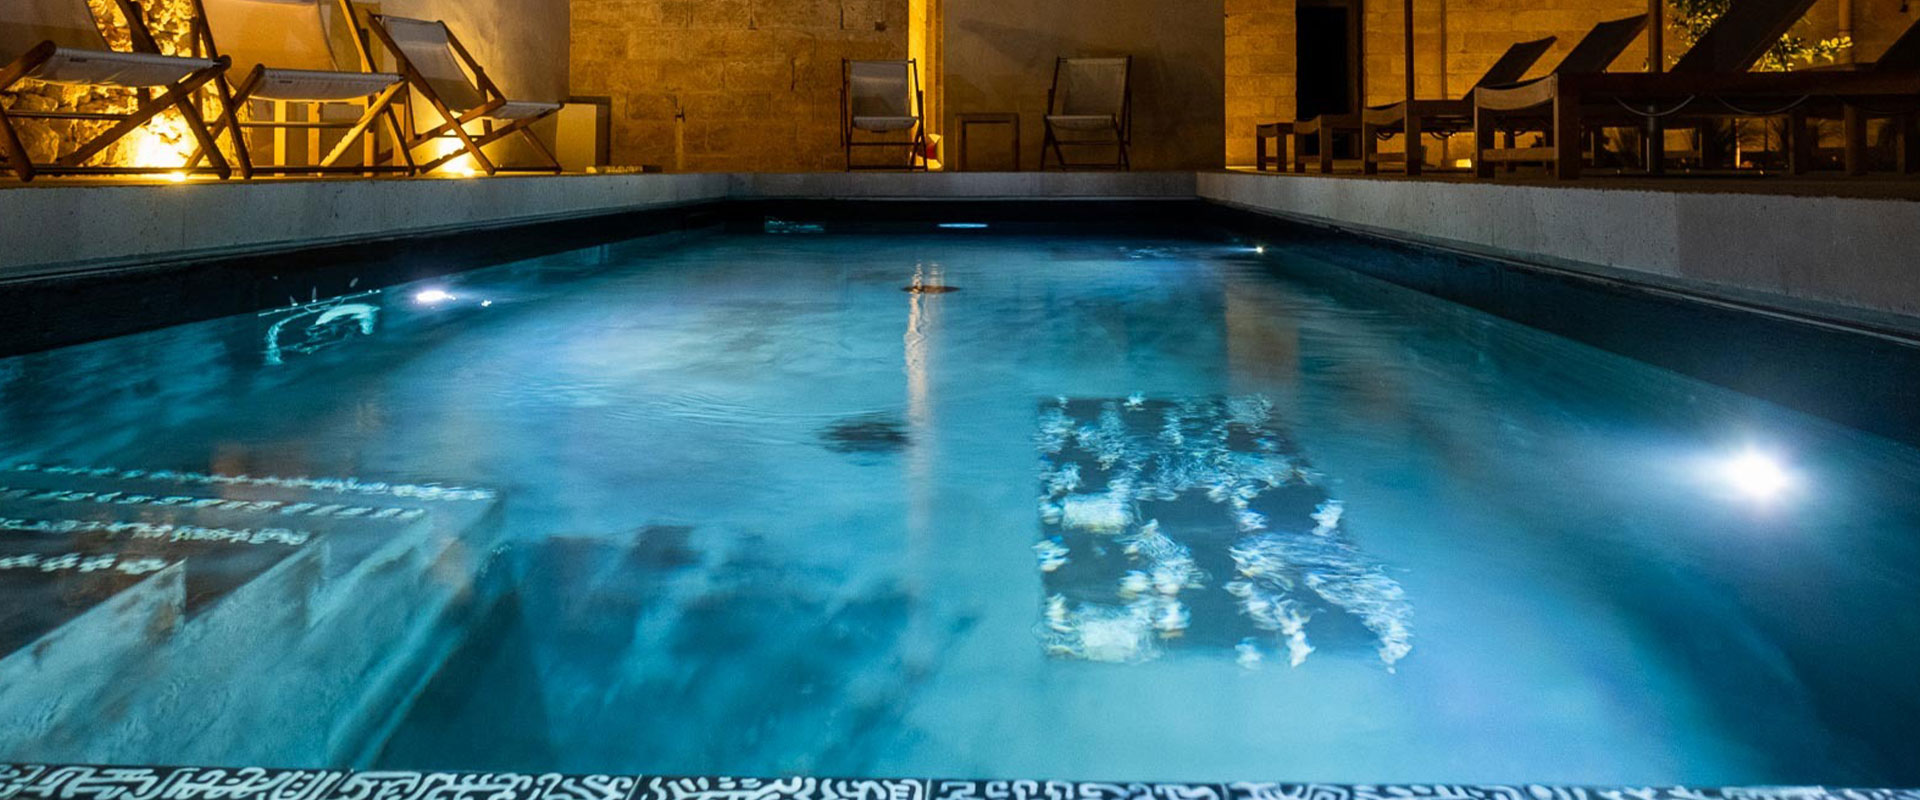 salento piscina vacanze masseria spongano camere albergo hotel b&b ospitalità dimora i tre bacili itrebacili